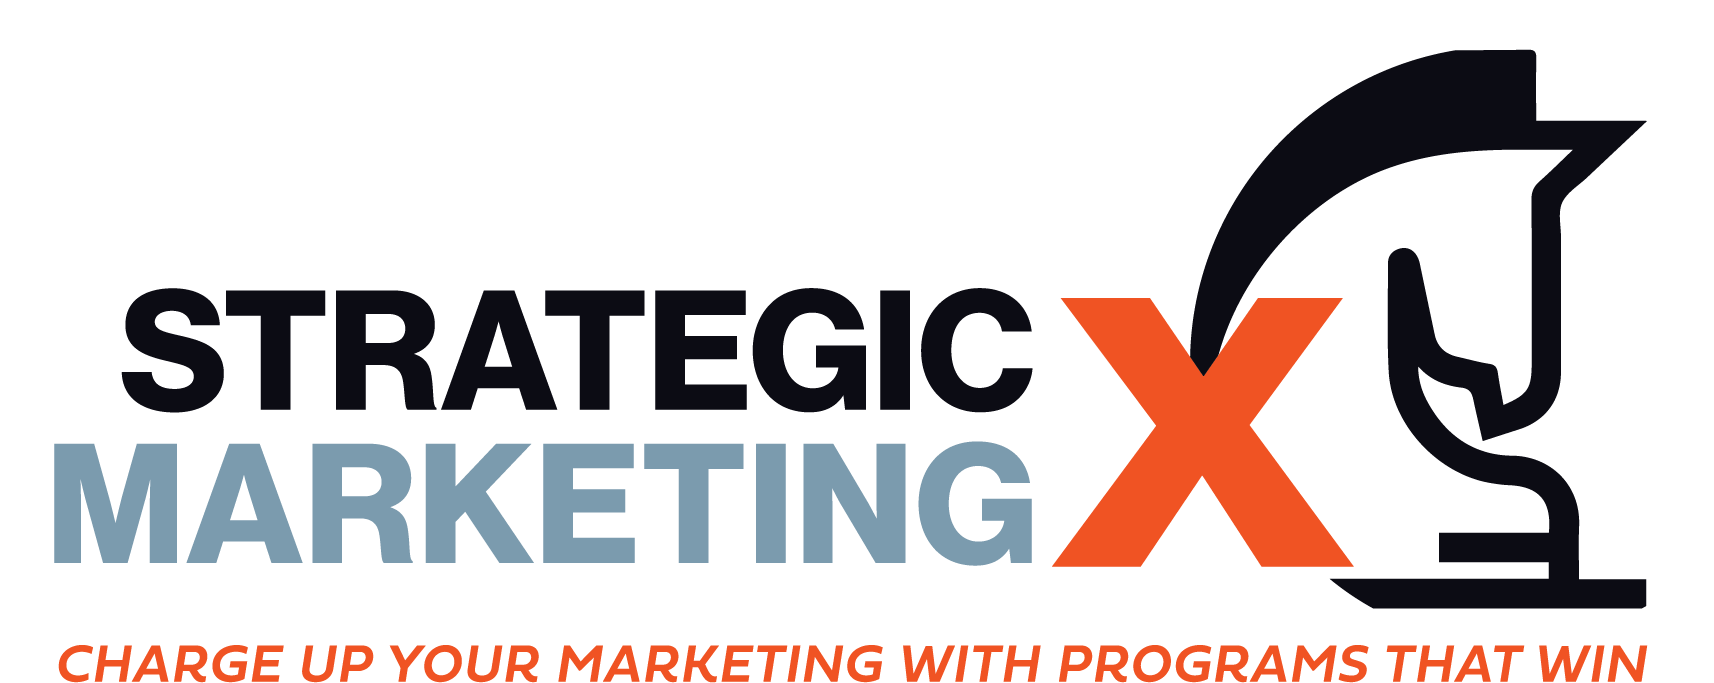 Strategic X Marketing logo NEMRA Service Provider